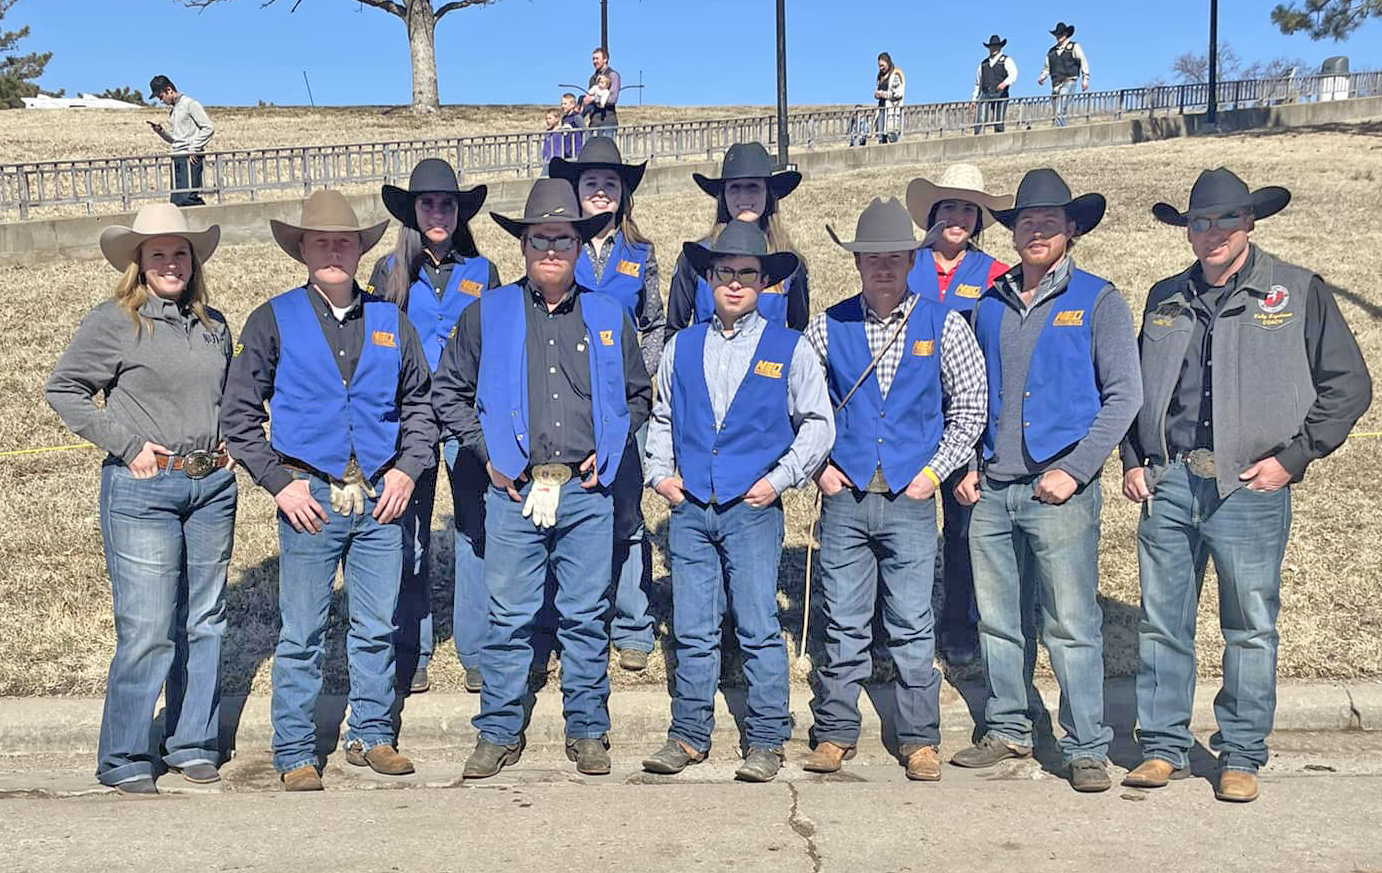 KState Rodeo Team pic